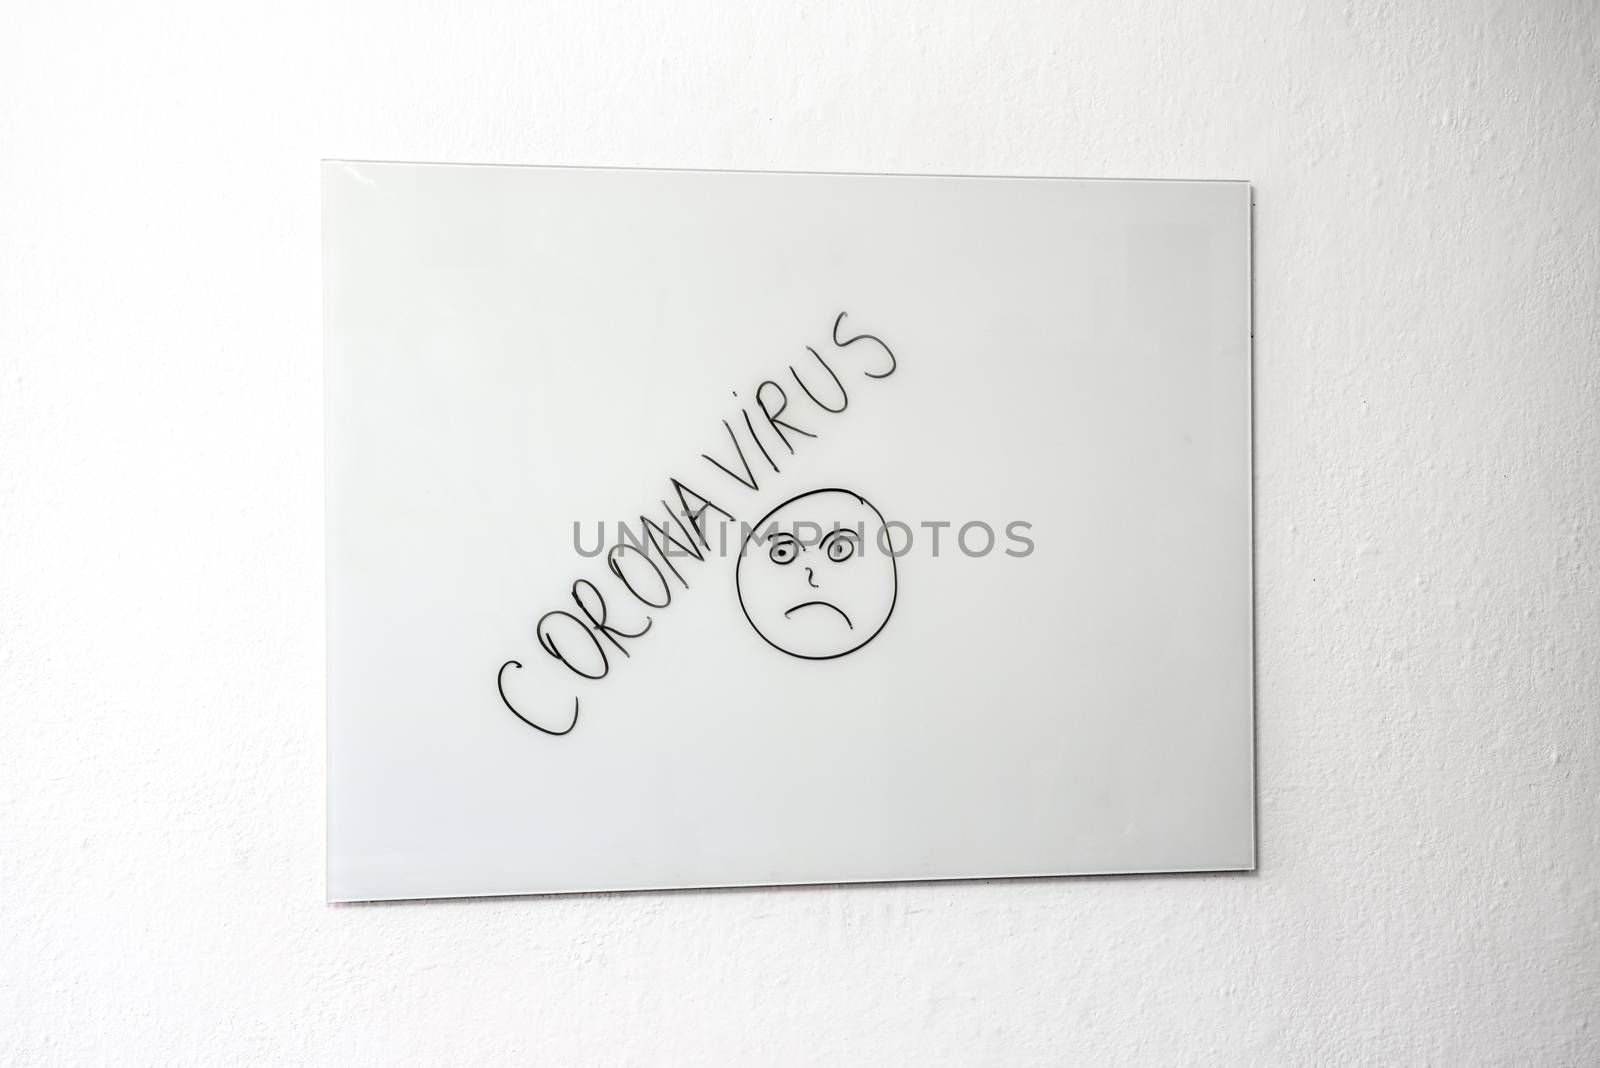 Sad face and Coronavirus on white board by savcoco